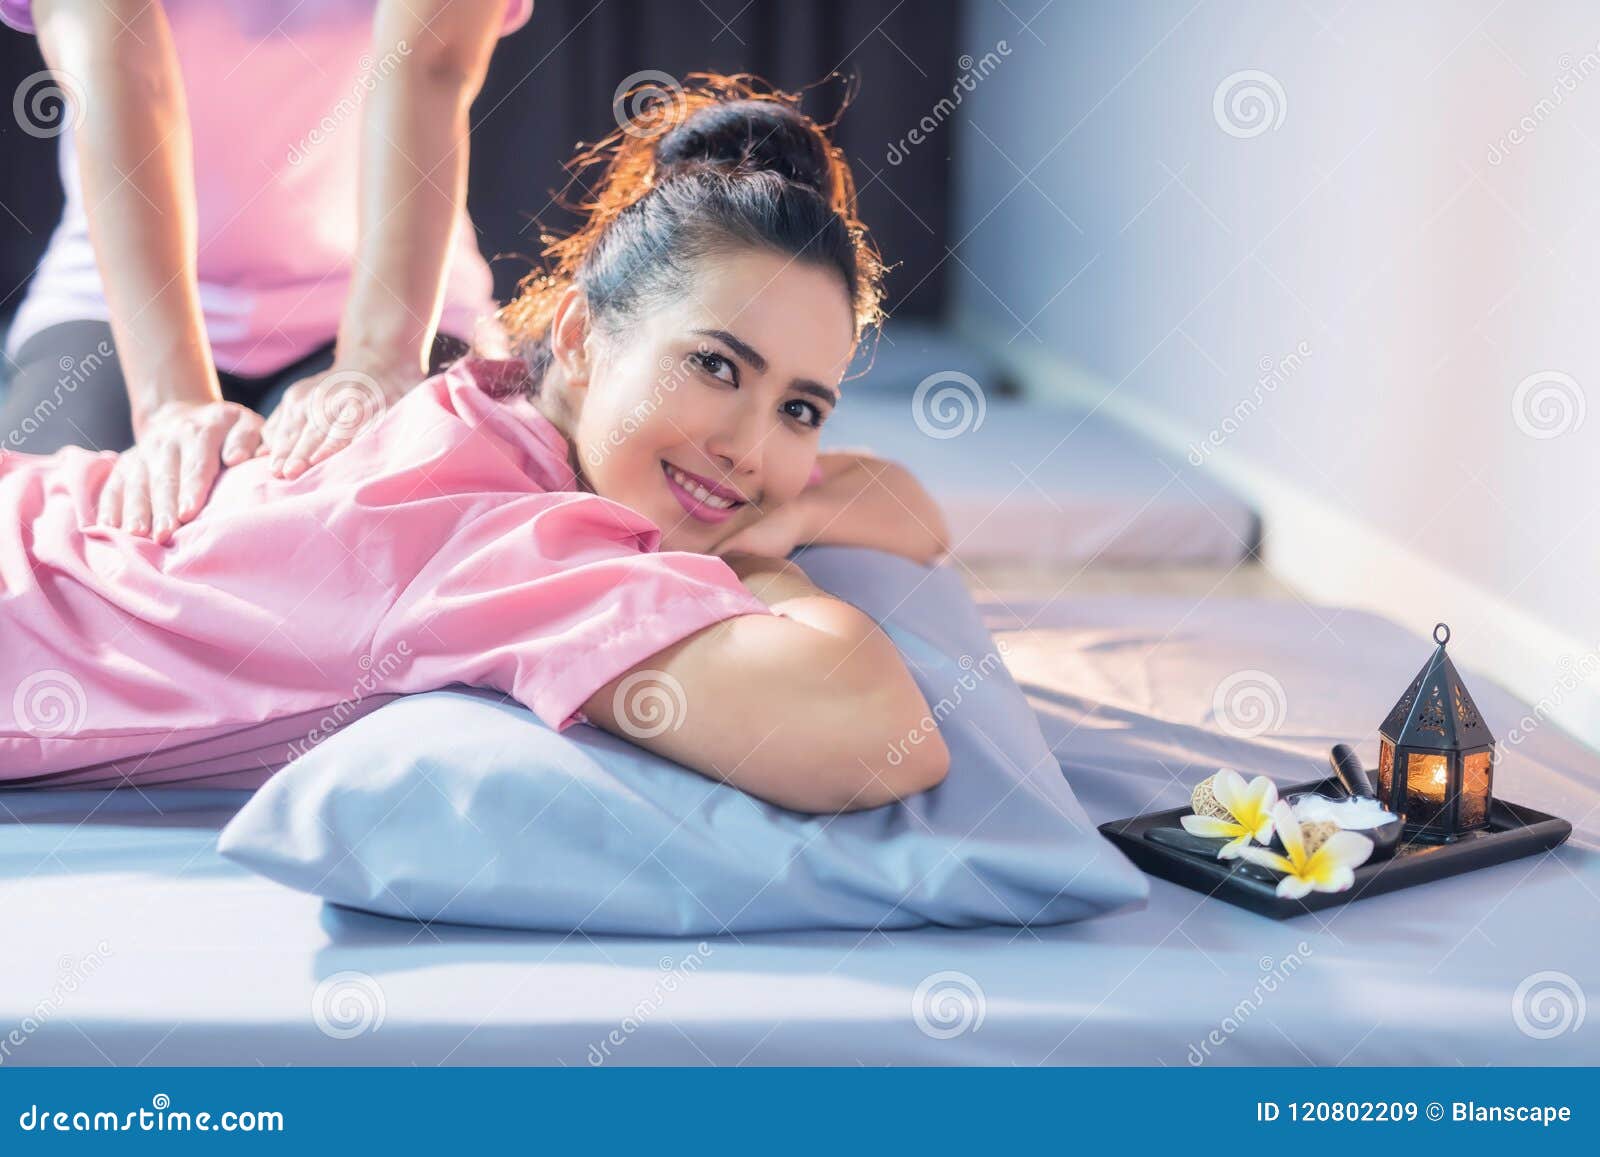 Smile Asian Woman Having Thai Massage Stock Image Image Of Cosmetic